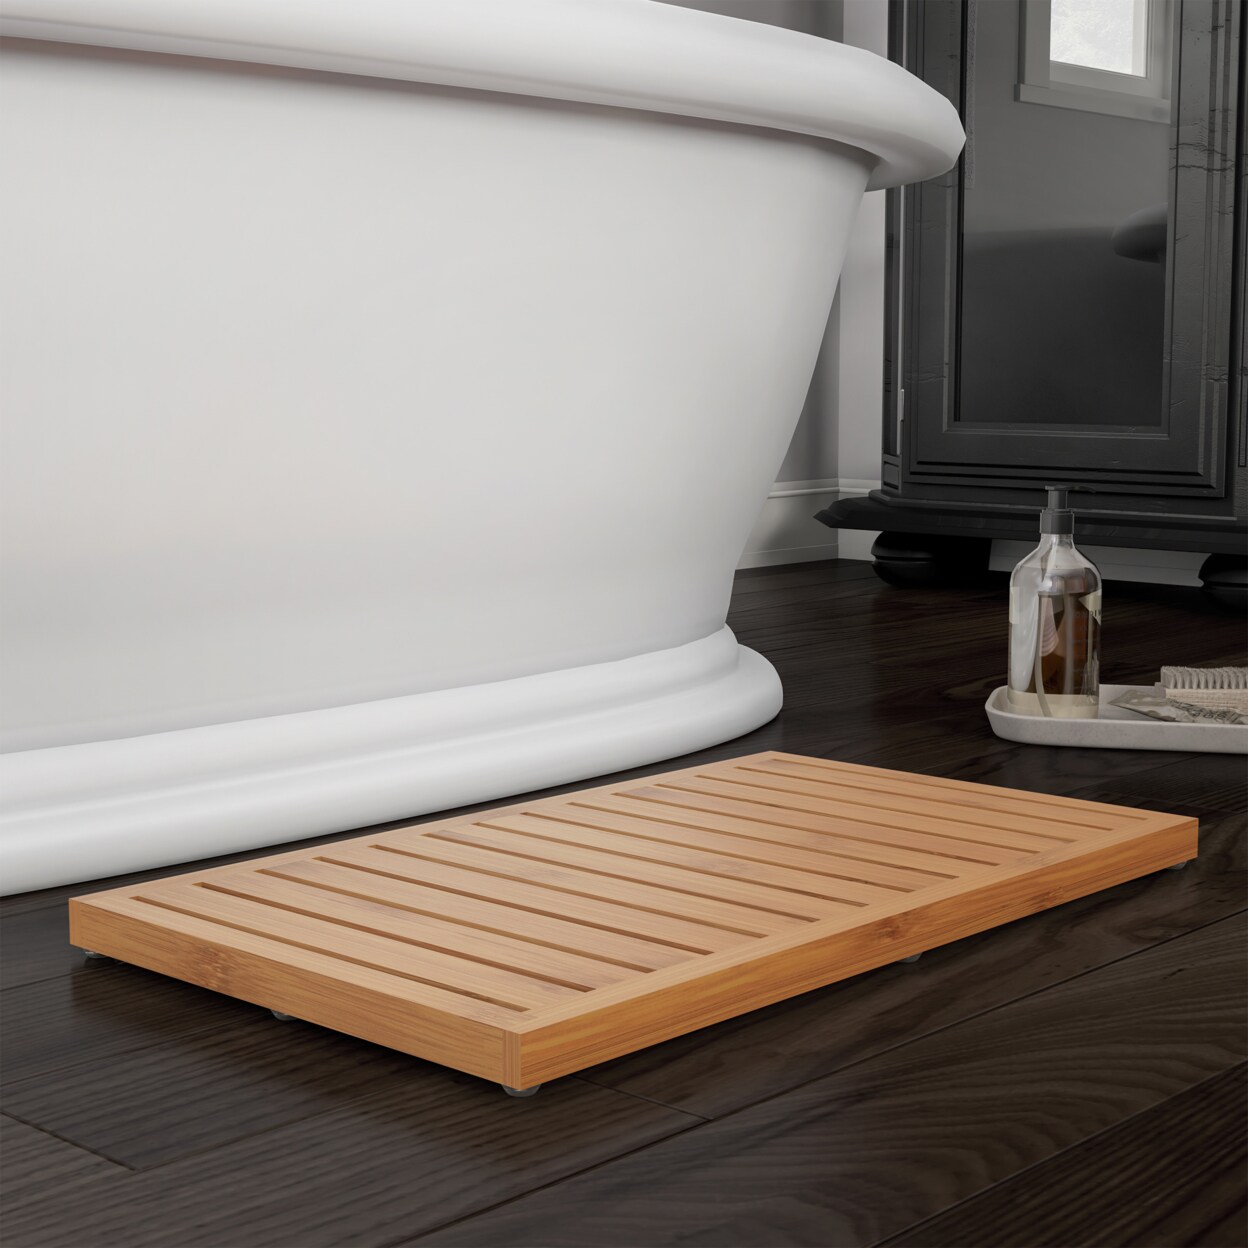 Lavish Home Bamboo Bath Mat Eco-Friendly Natural Wooden Non-Slip Slatted  Design Mat for Indoor and Outdoor Bathtub, Shower, Sauna